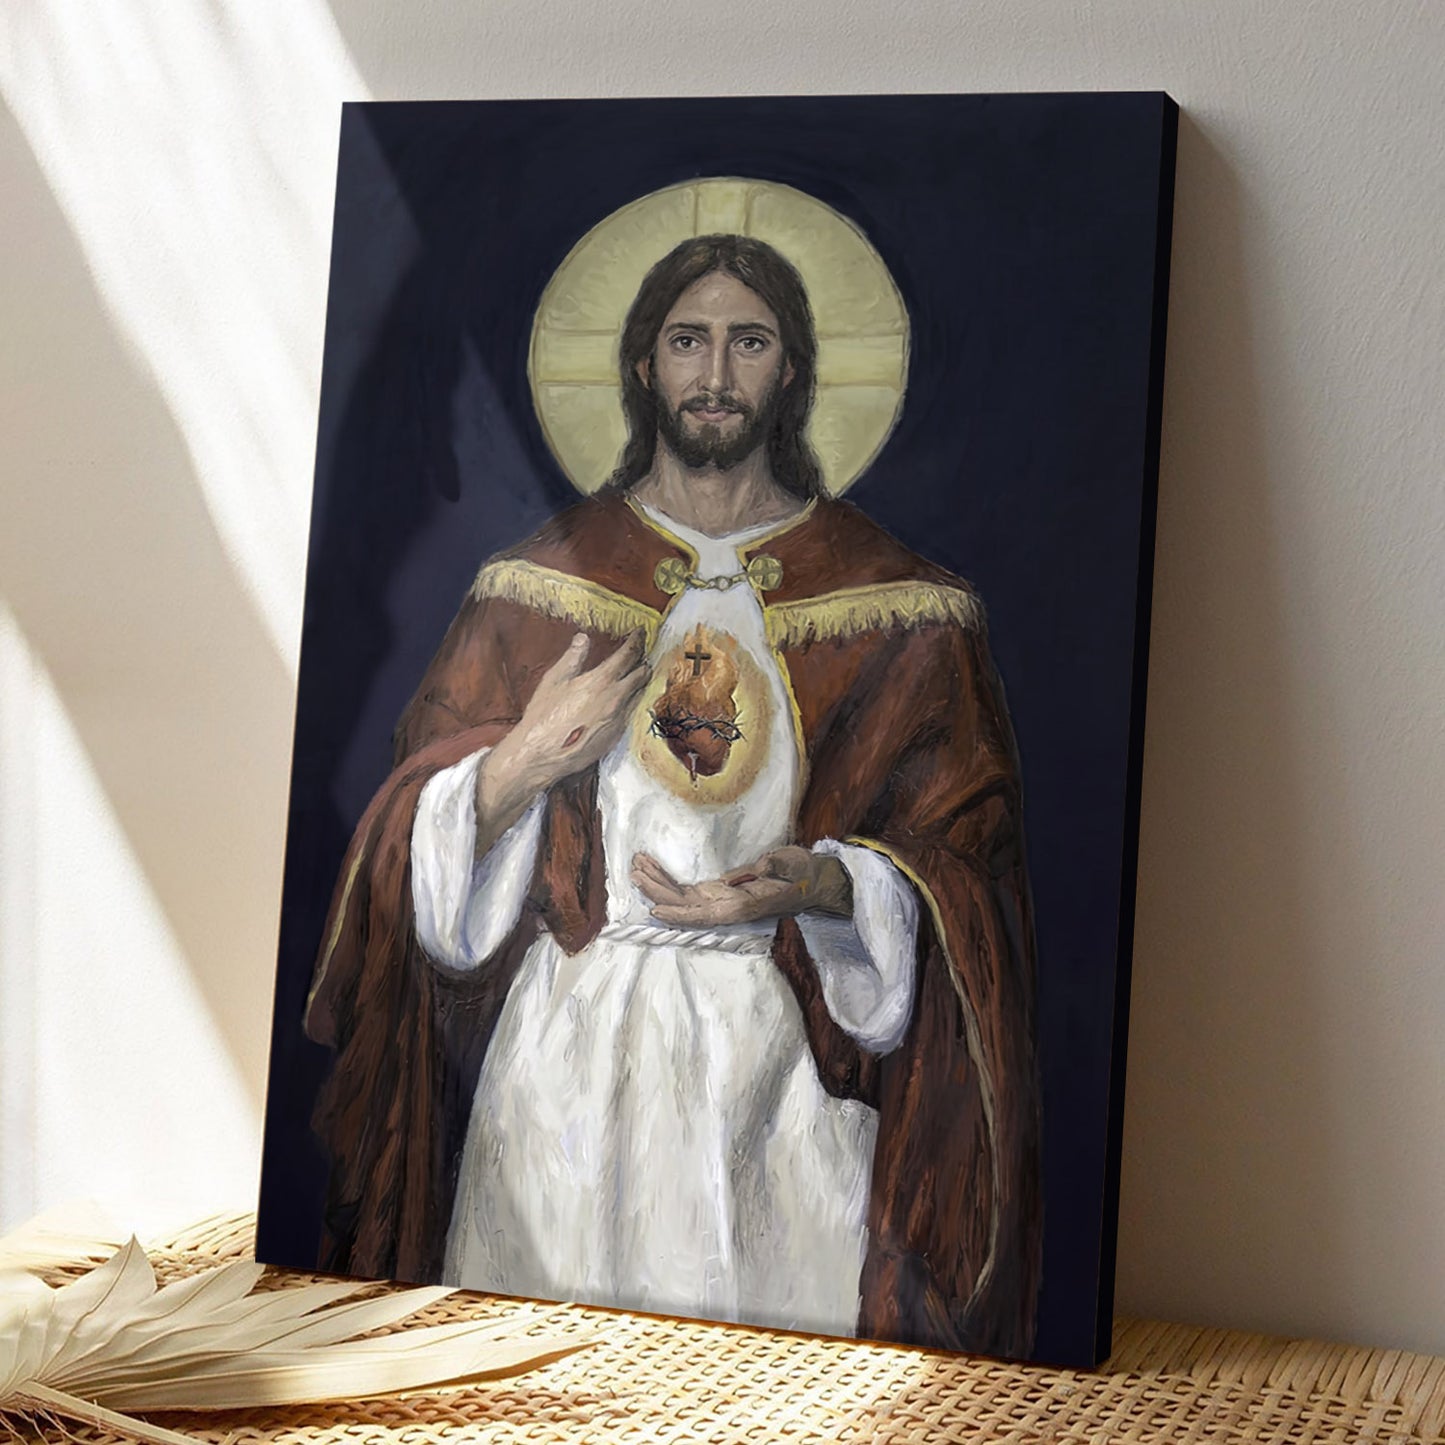 Sacred Heart - Jesus Canvas Poster - Christian Wall Art - Christ Pictures - Christian Canvas Prints - Religious Wall Art Canvas - Ciaocustom